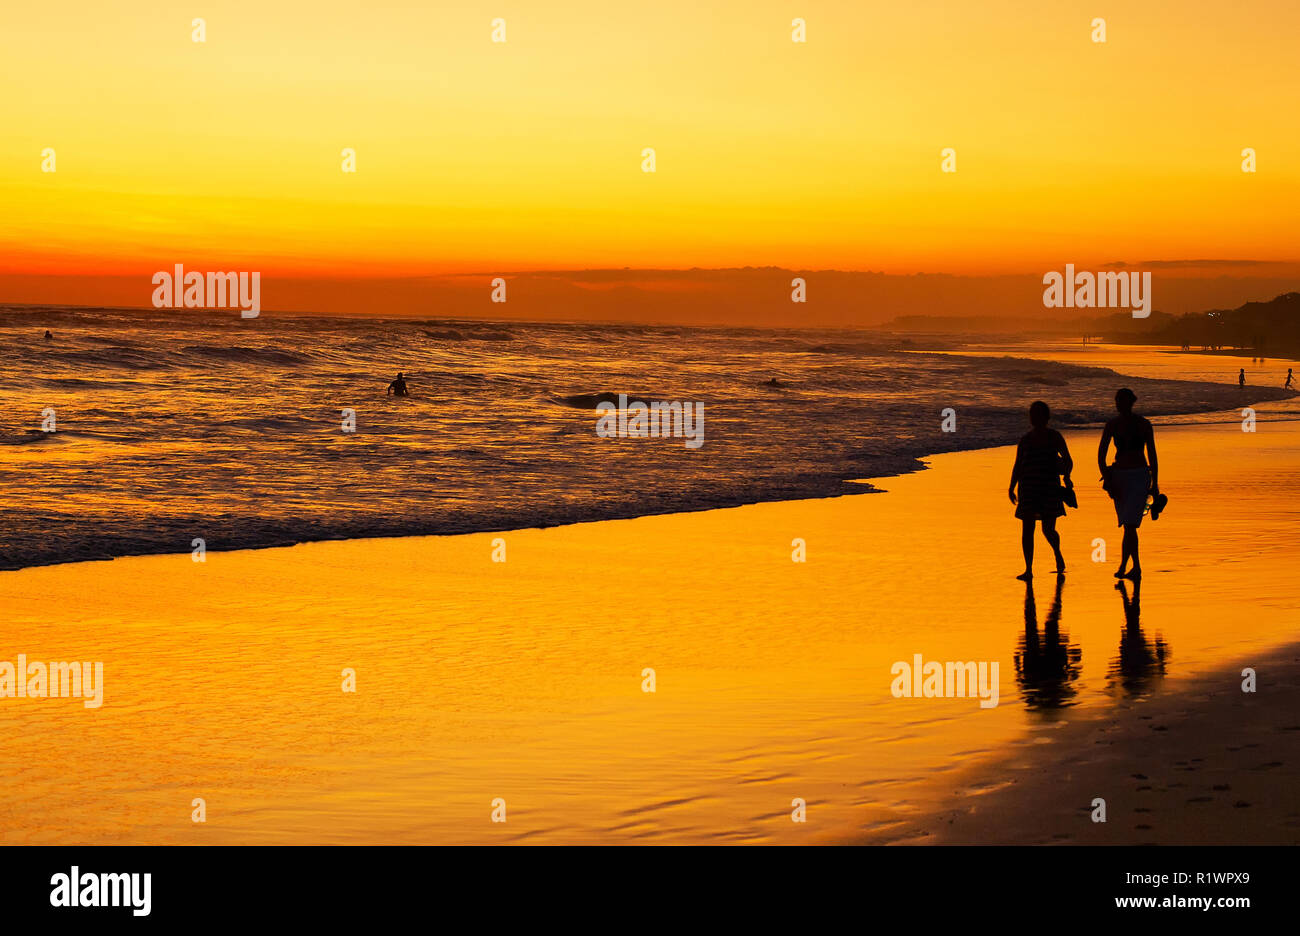 People walking on the ocean beach at sunset.  Bali island, Indonesia Stock Photo